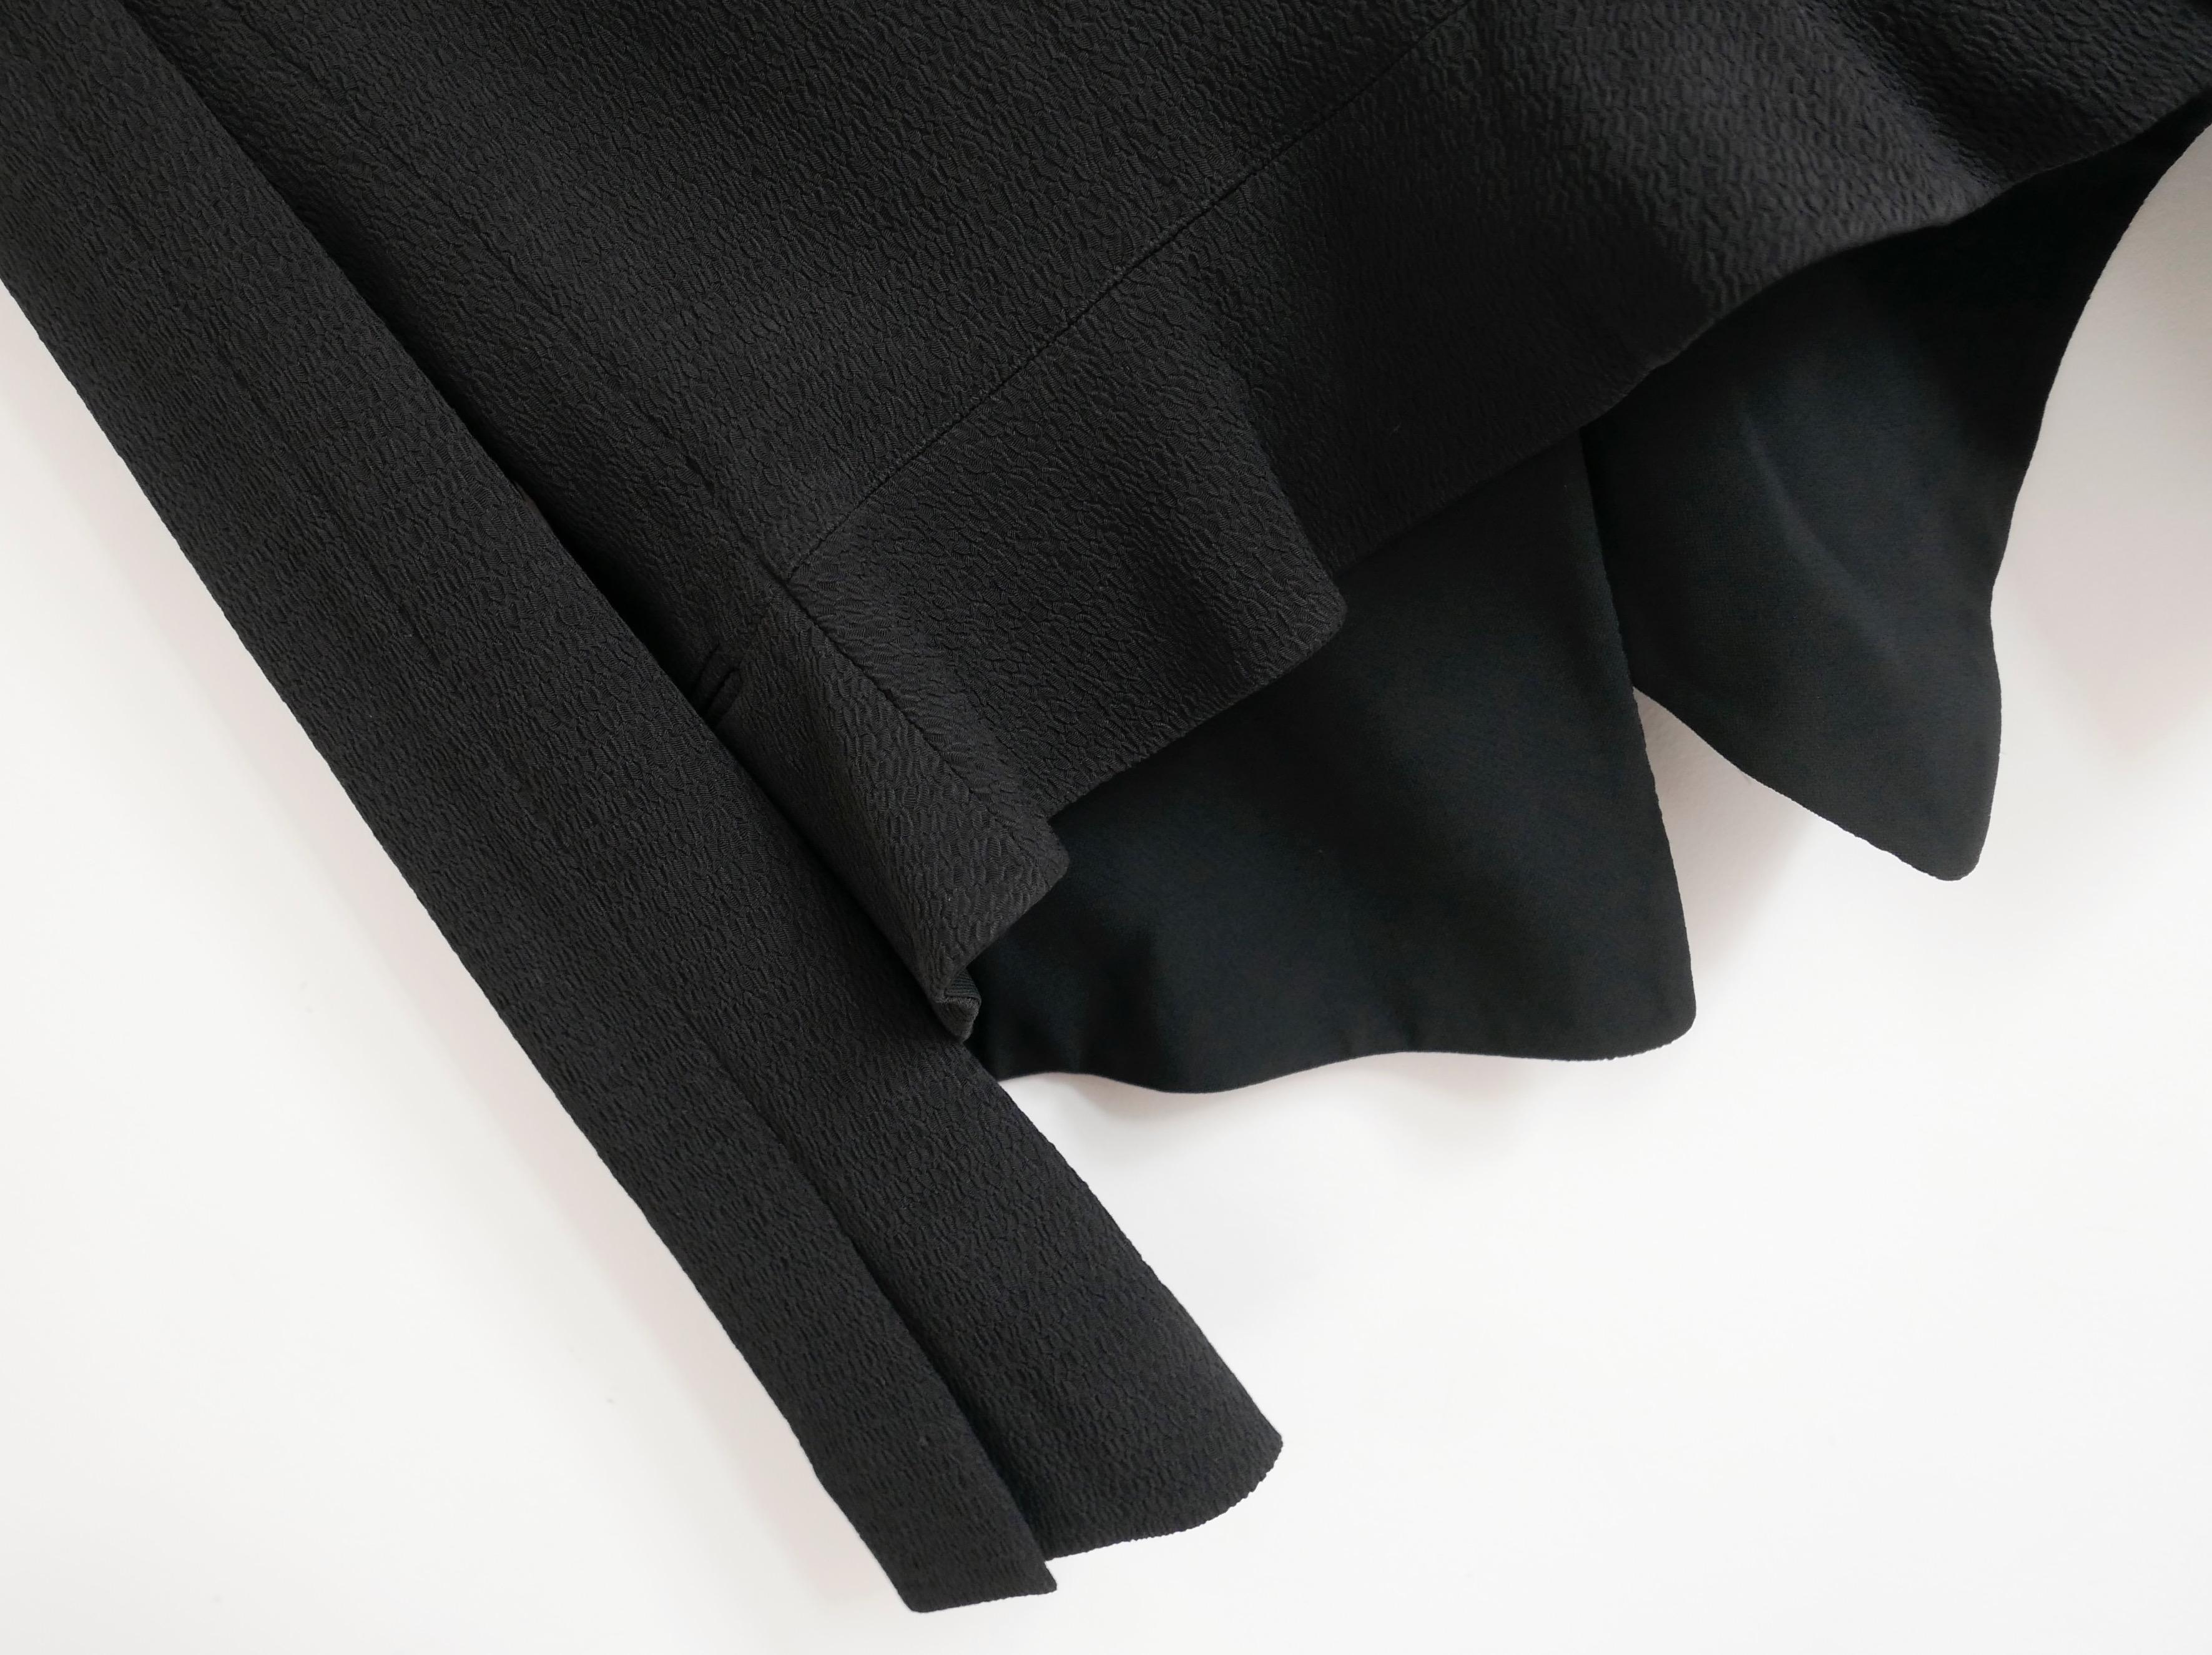 Women's Chloe black textured tuxedo inspired jacket blazer